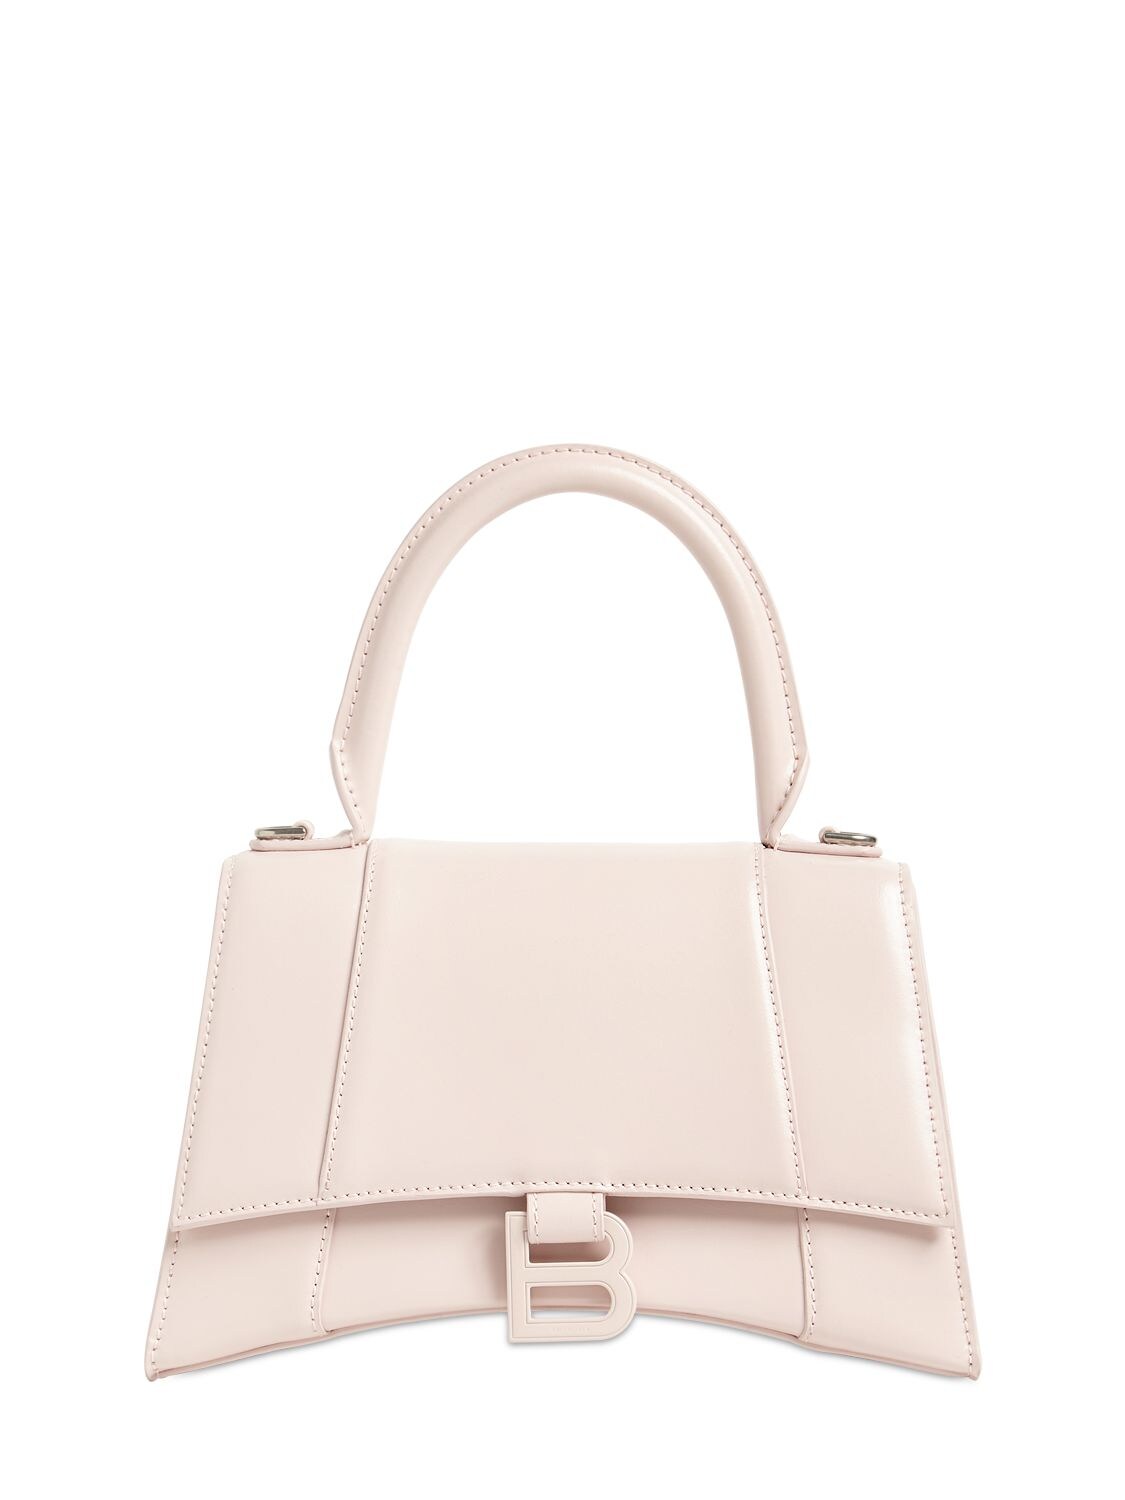 Luxury handbag - Hourglass Balenciaga handbag in smooth light pink leather